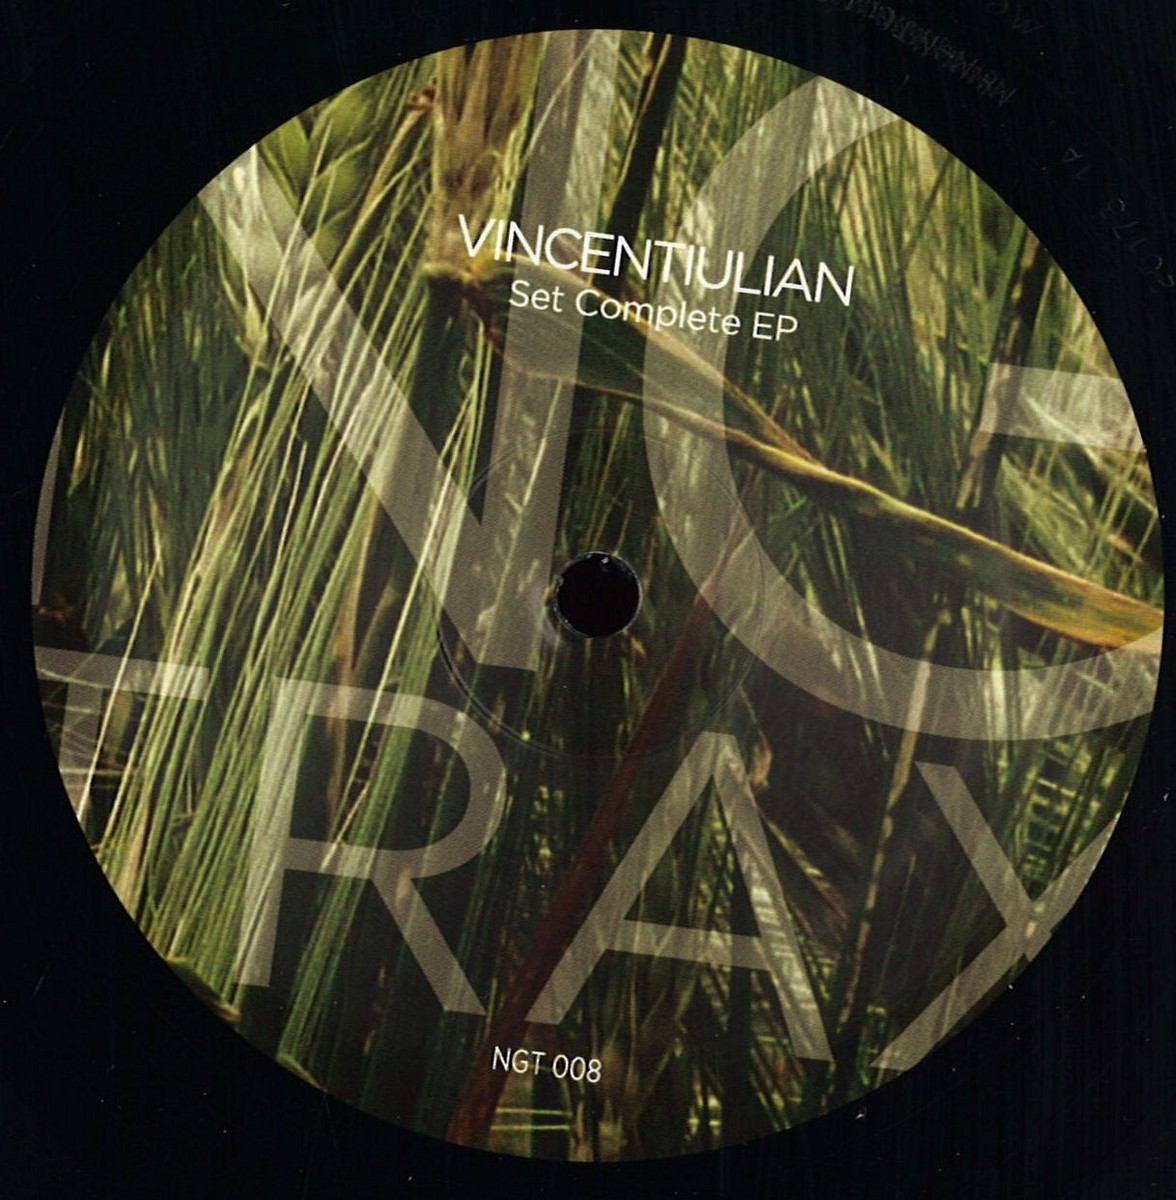 VincentIulian - SET COMPLETE EP [NGT008]